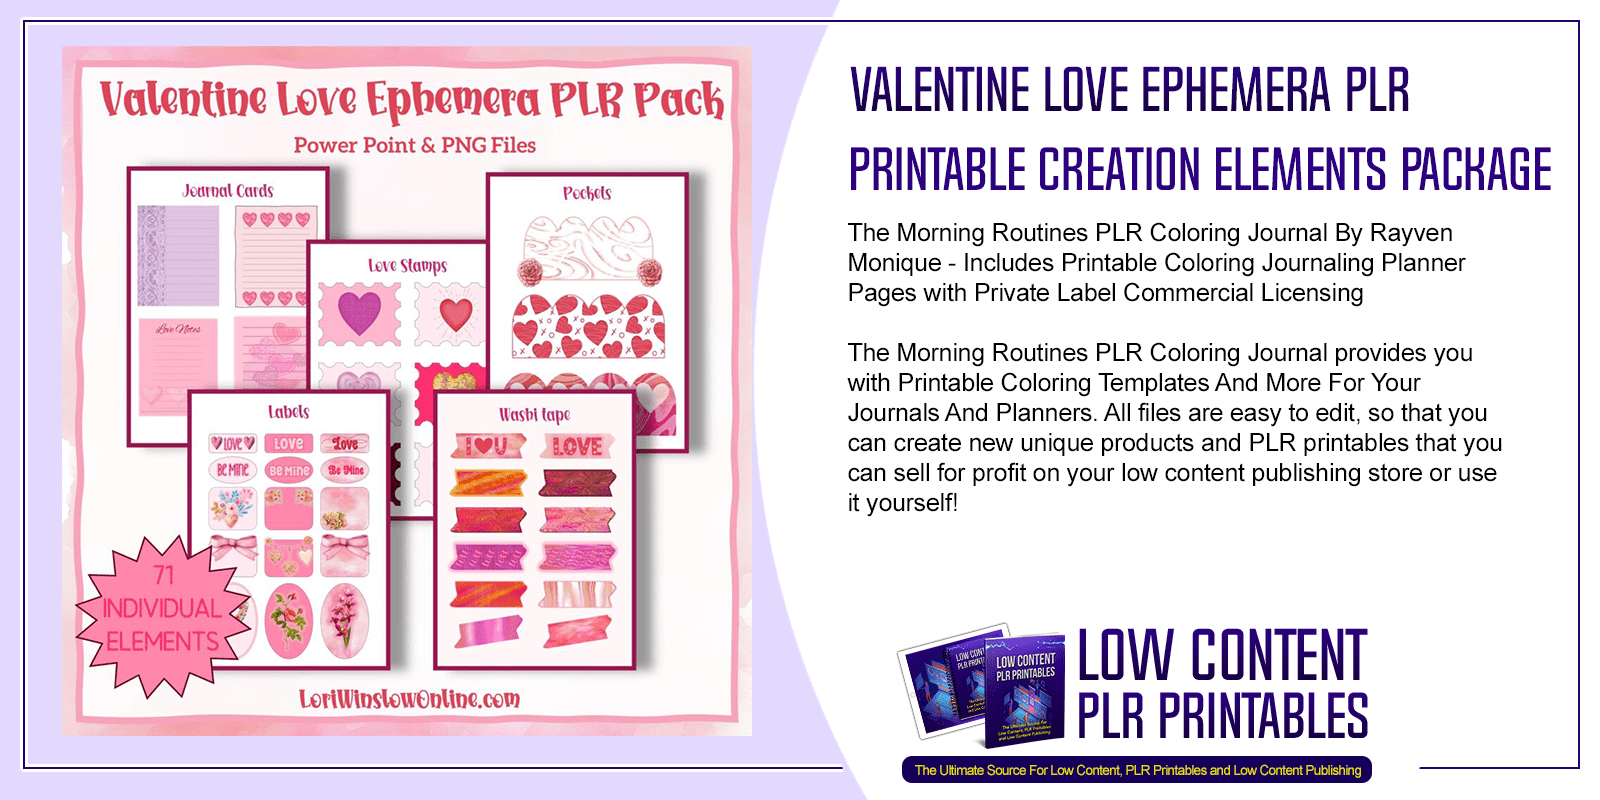 Valentine Love Ephemera PLR Printable Creation Elements Package